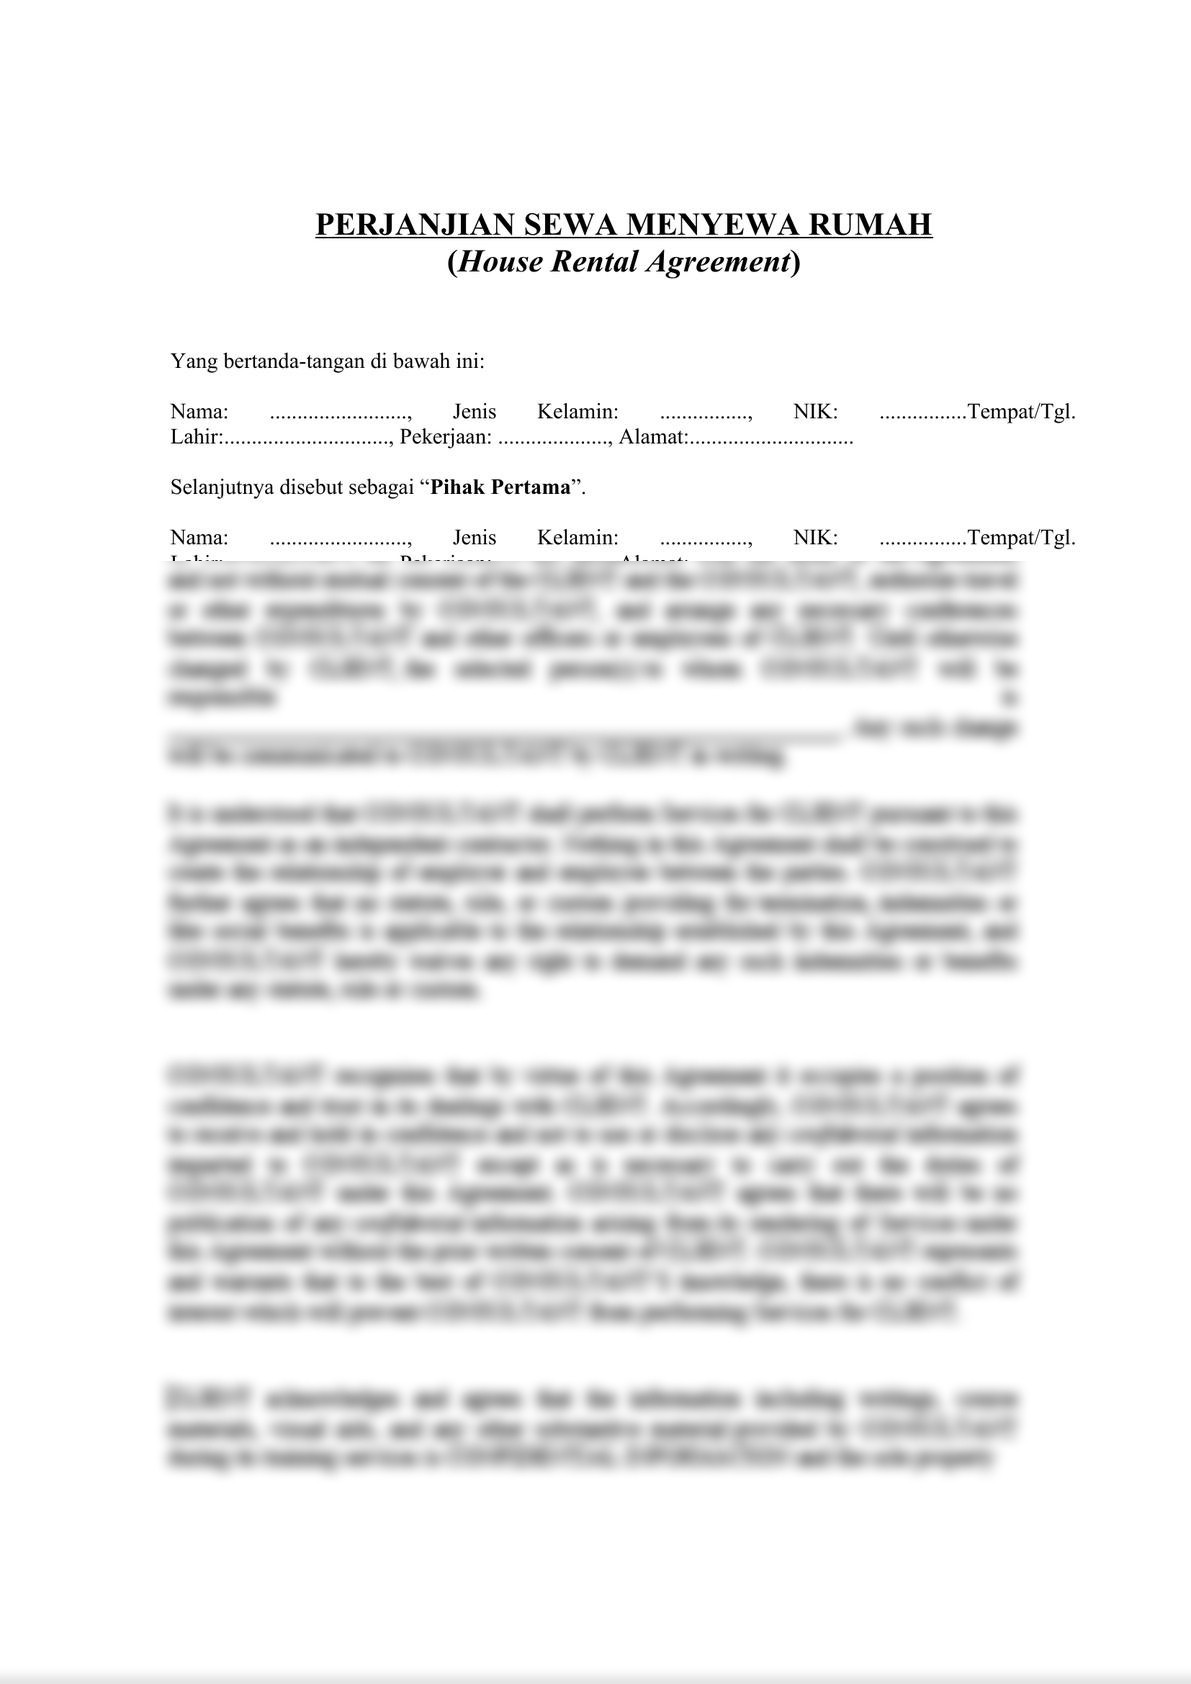 House Rental Agreement (Perjanjian Sewa Menyewa Rumah)-0